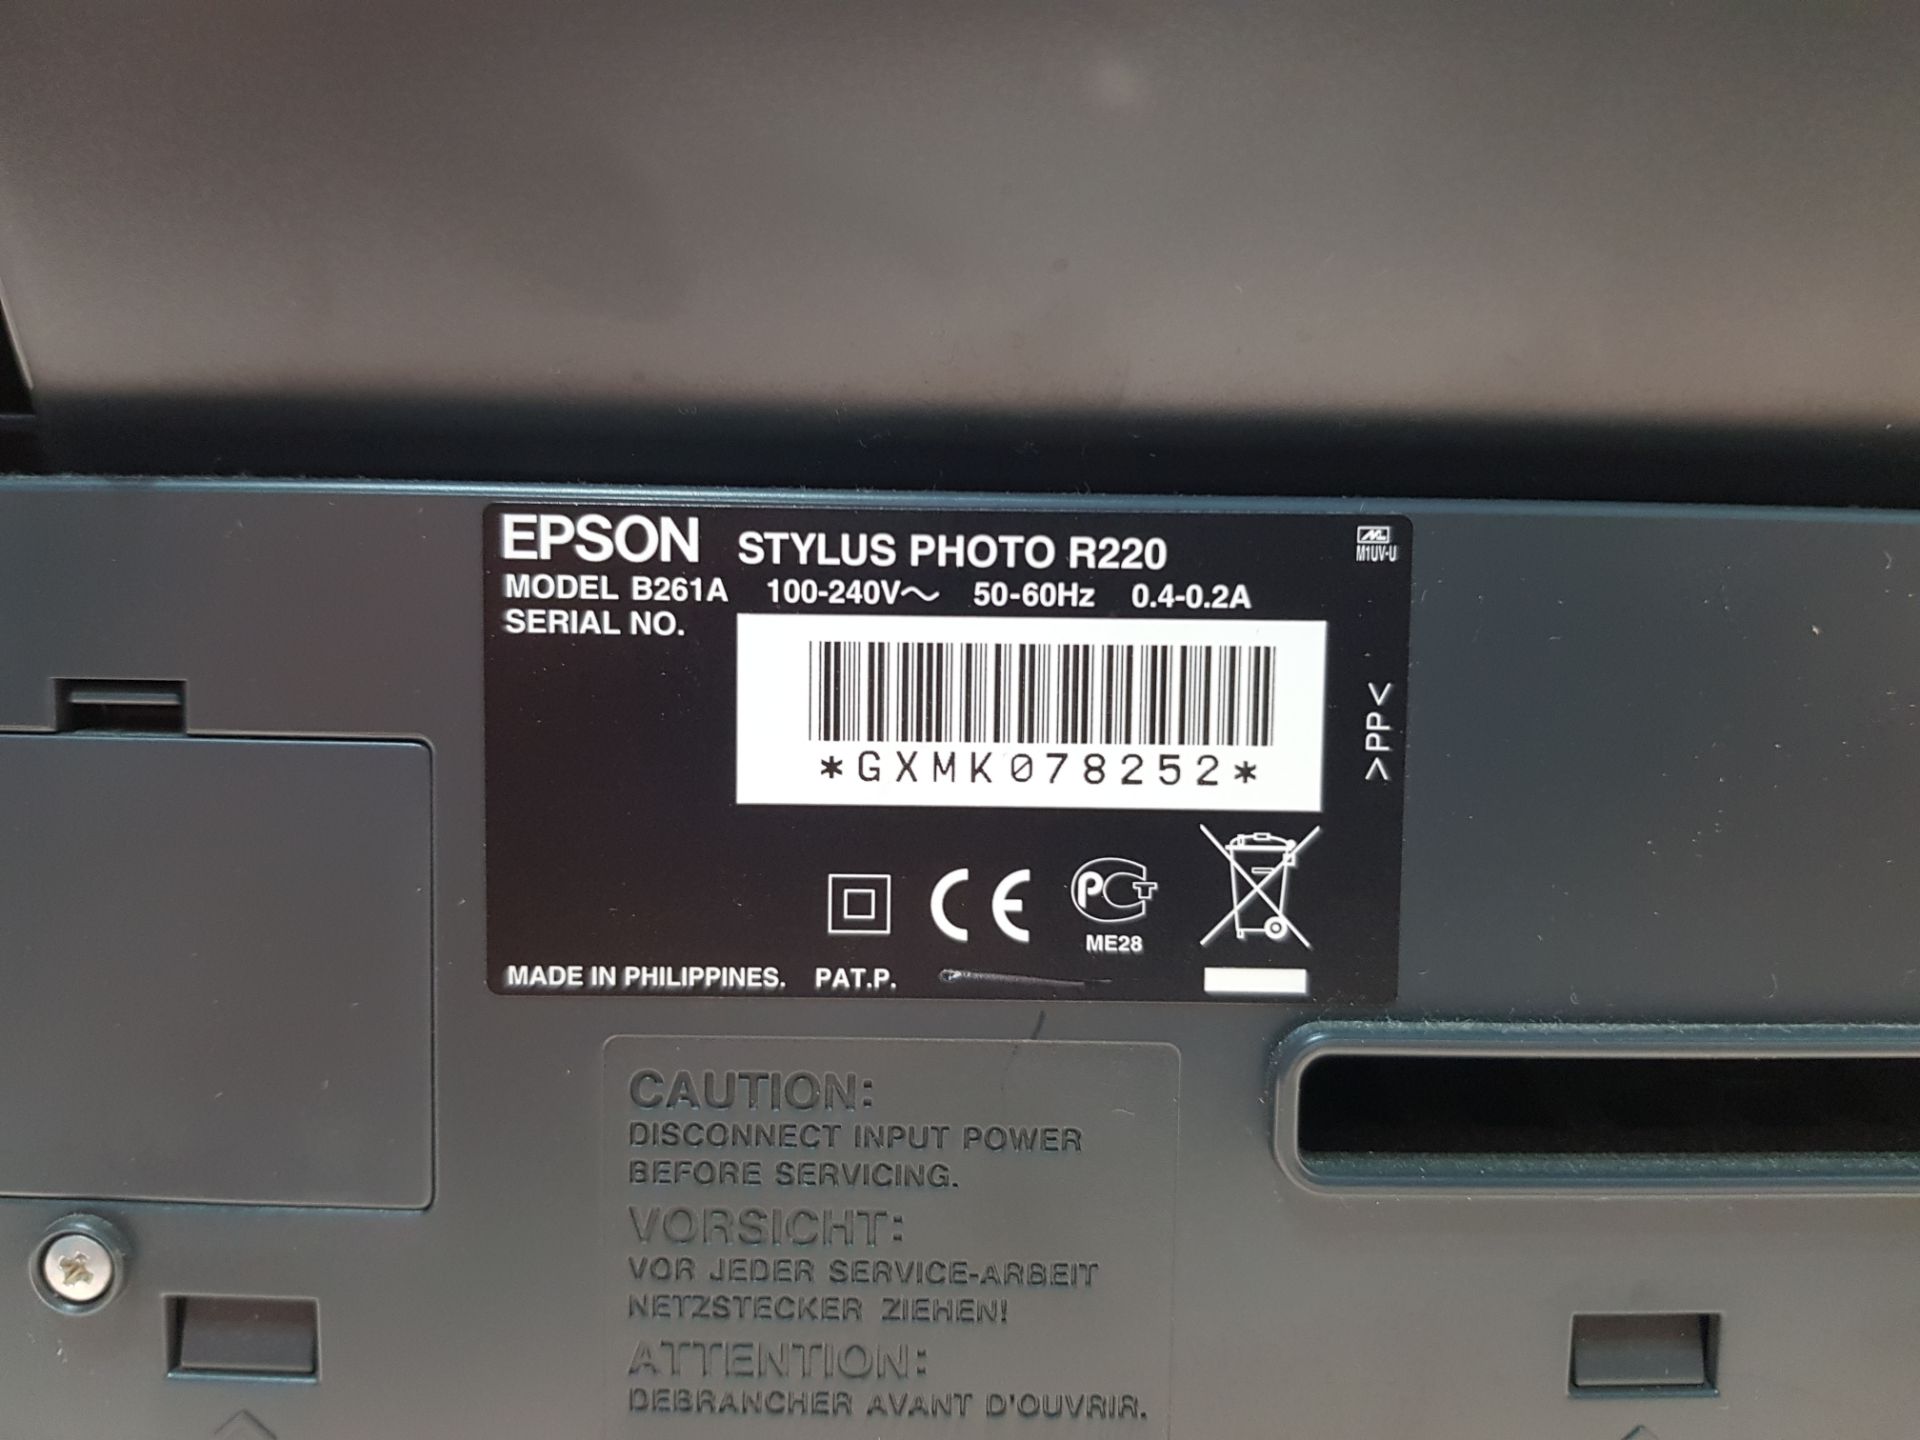 Epson Stylus Photo R220 Ink Jet Printer Model: B261A S/N: GXMK078252 - Image 4 of 4